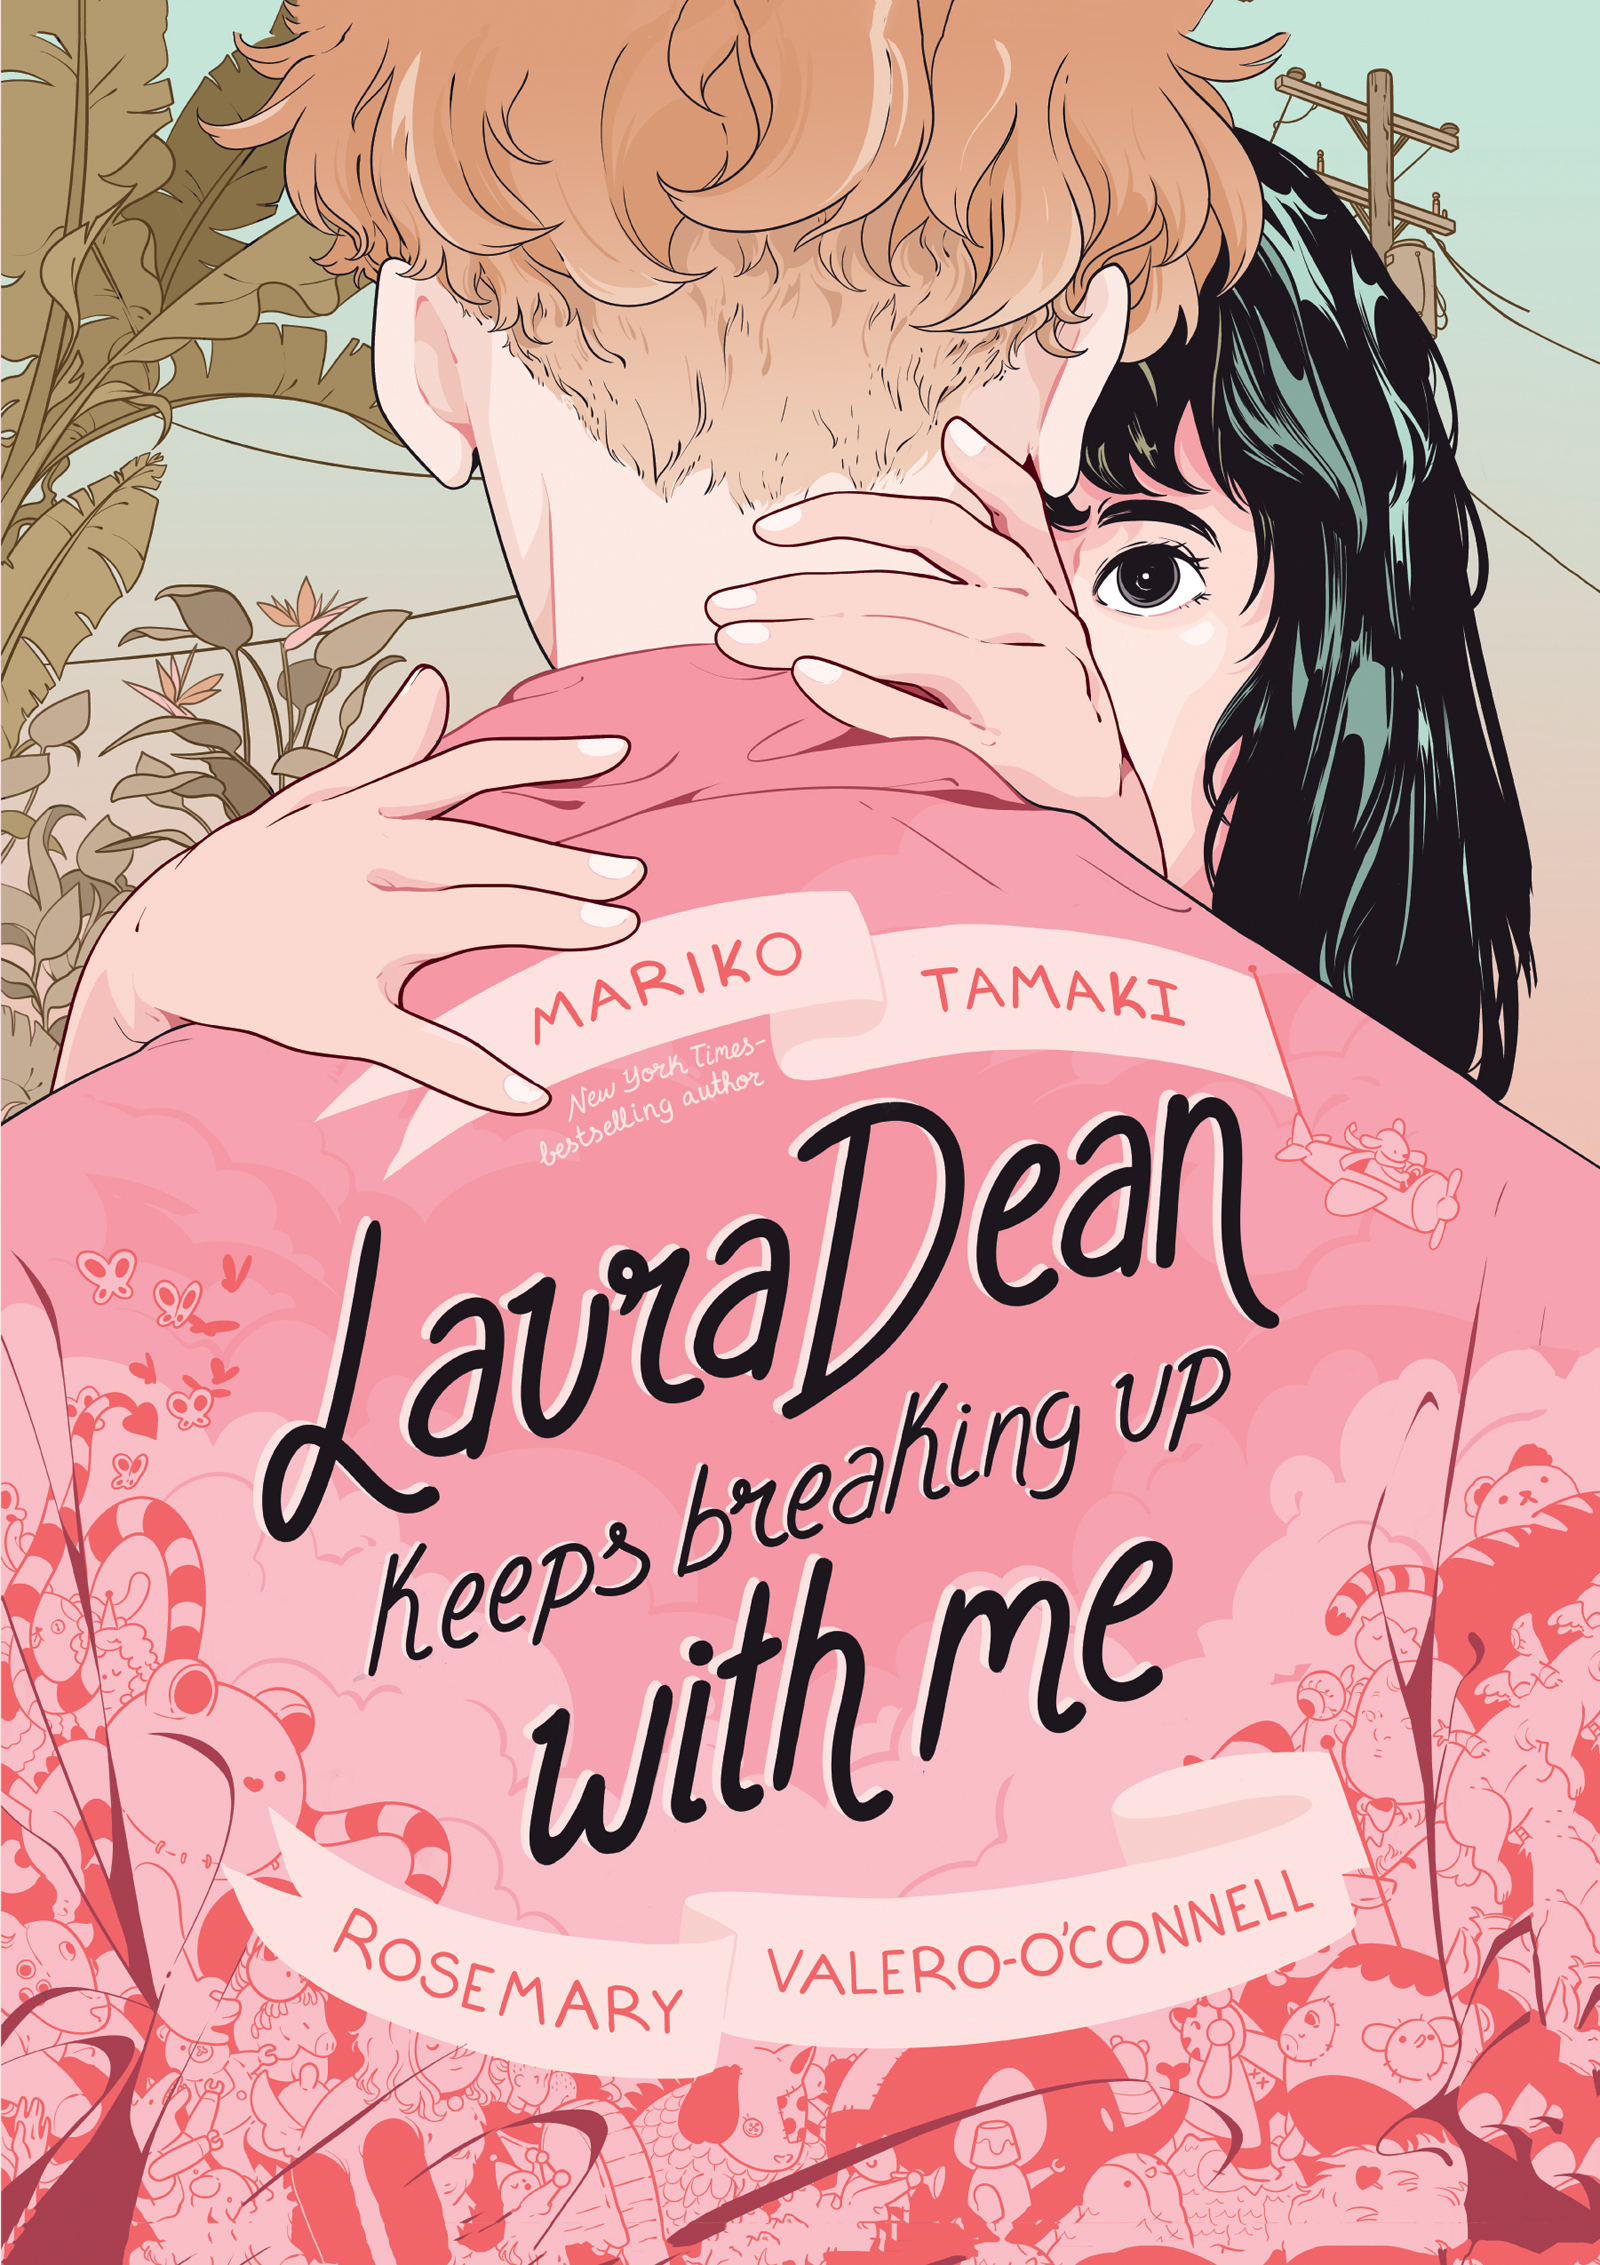 Laura Dean Keeps Breaking Up with Me | Tamaki, Mariko